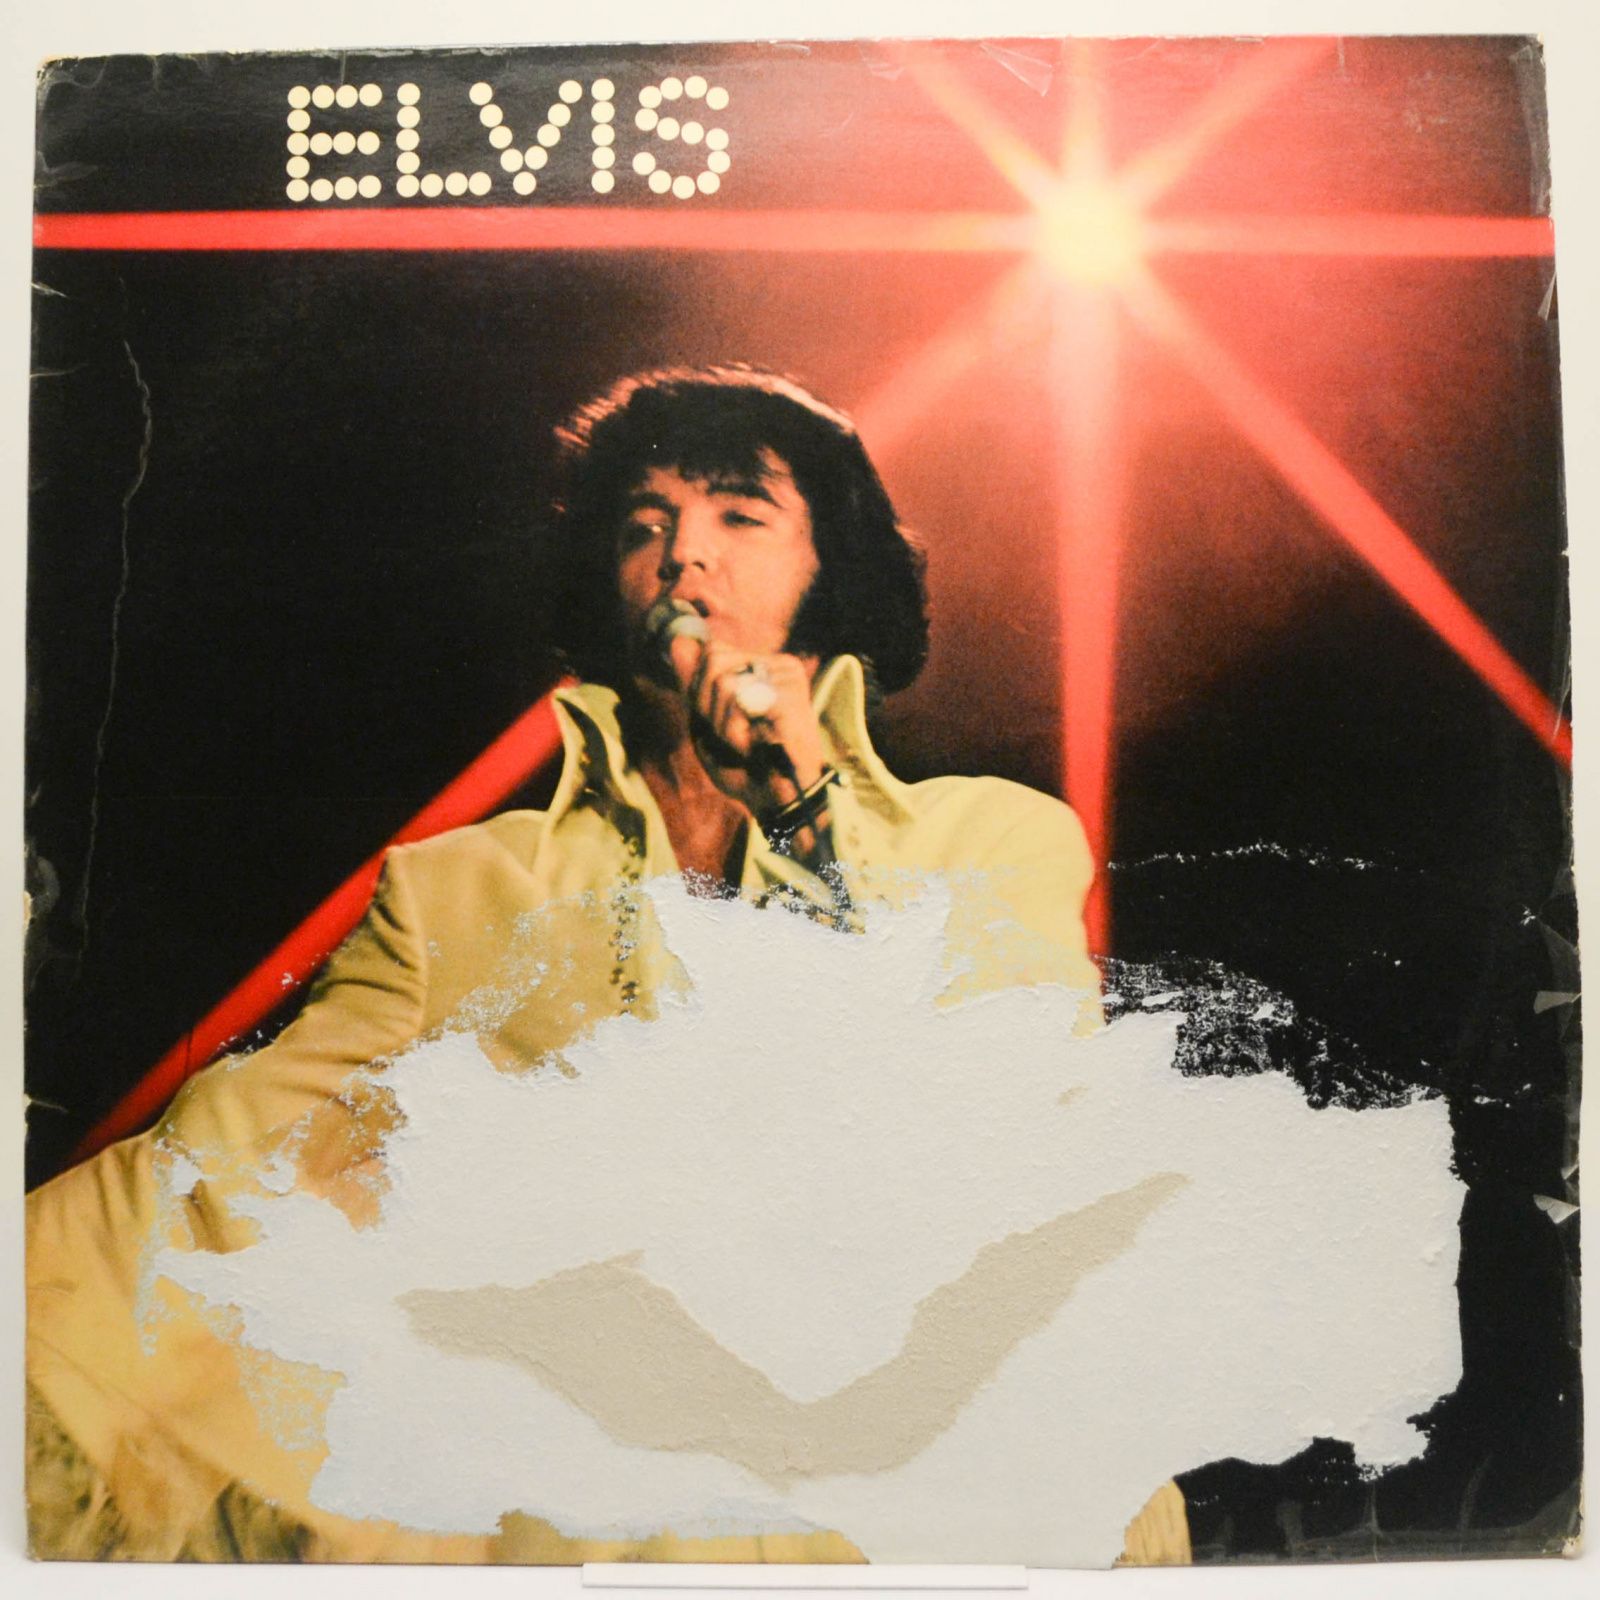 Elvis Presley — You'll Never Walk Alone, 1971